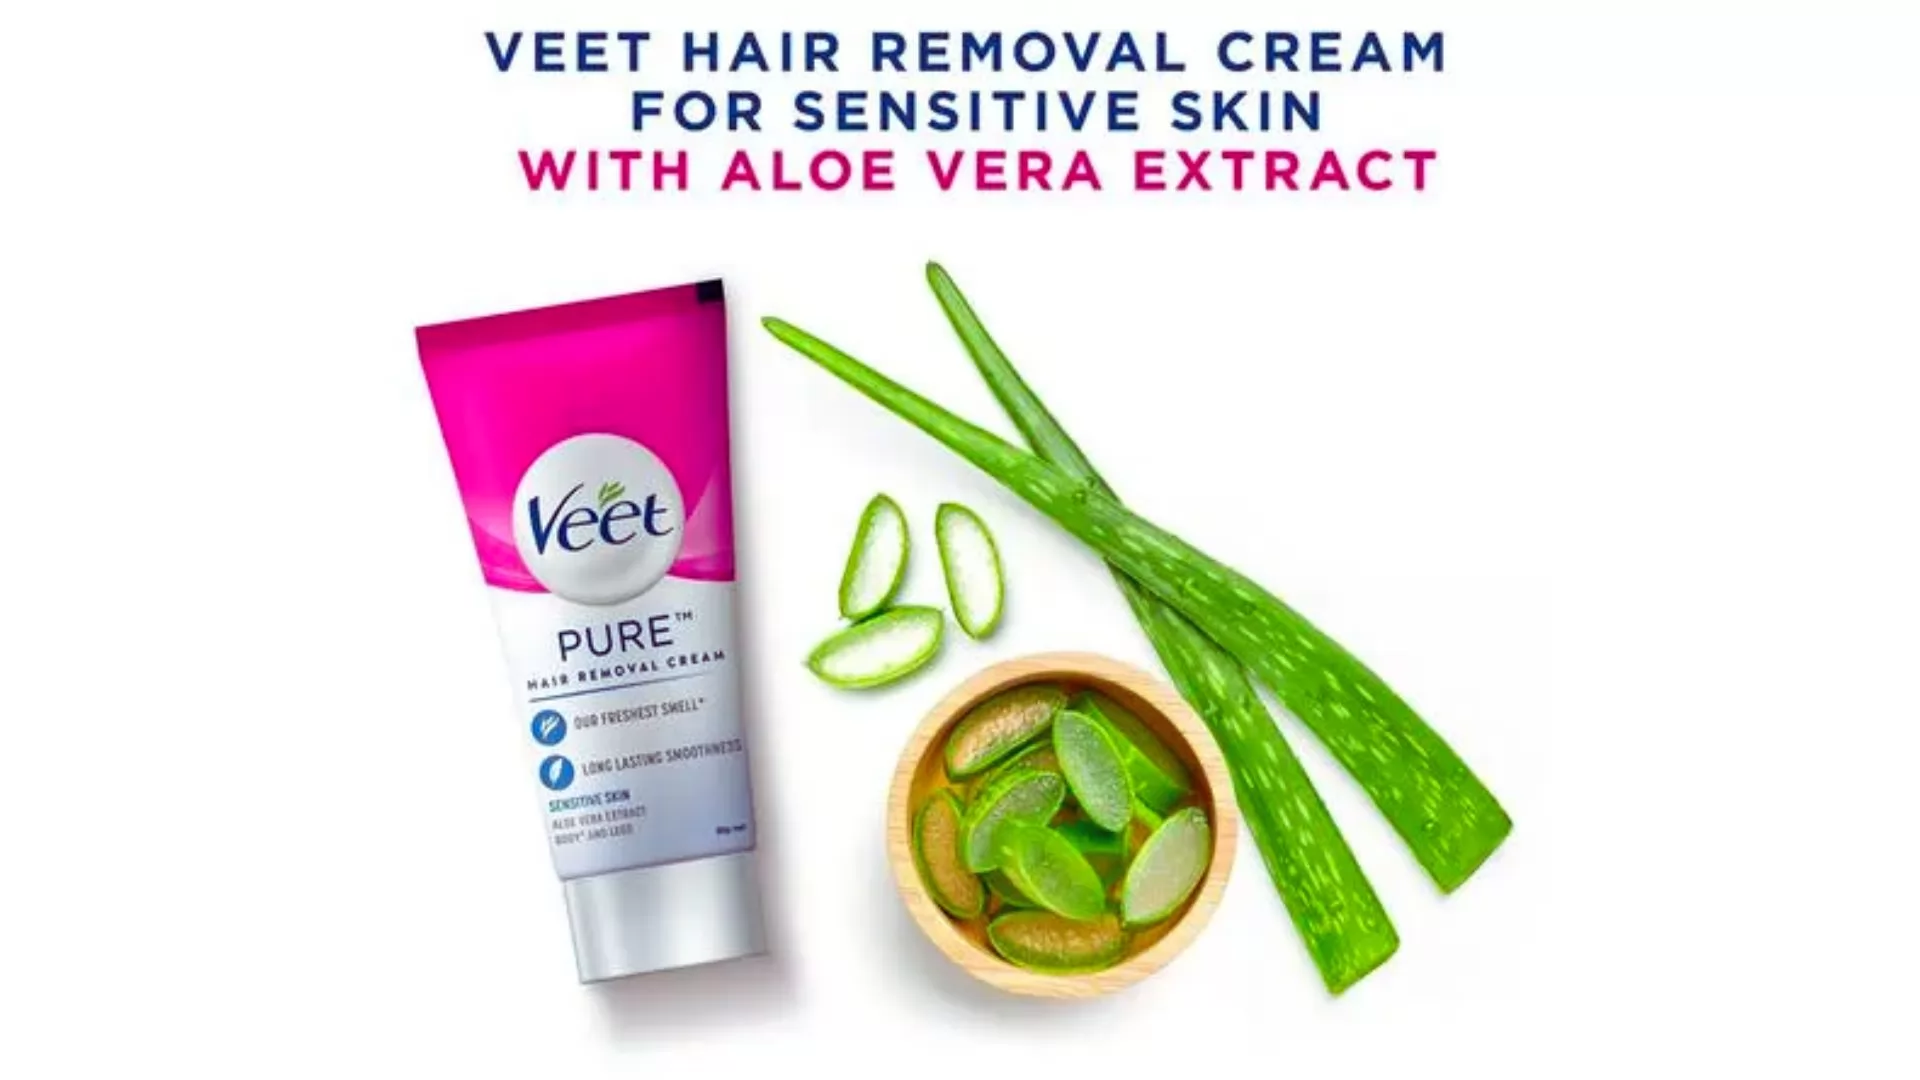 Veet Pure hair removal cream